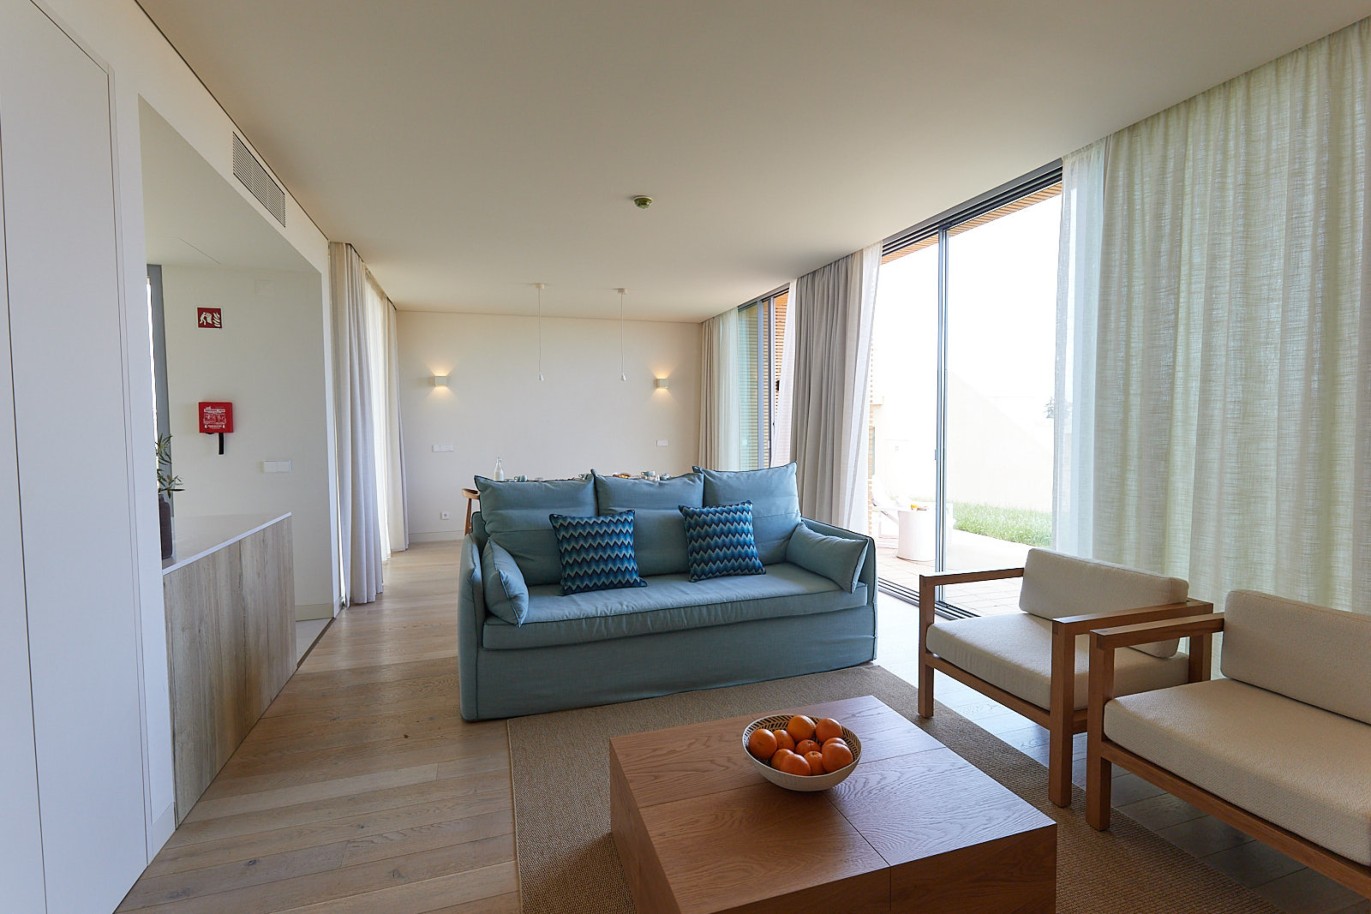 2 bedroom apartment in resort, for sale in Porches, Algarve_228838